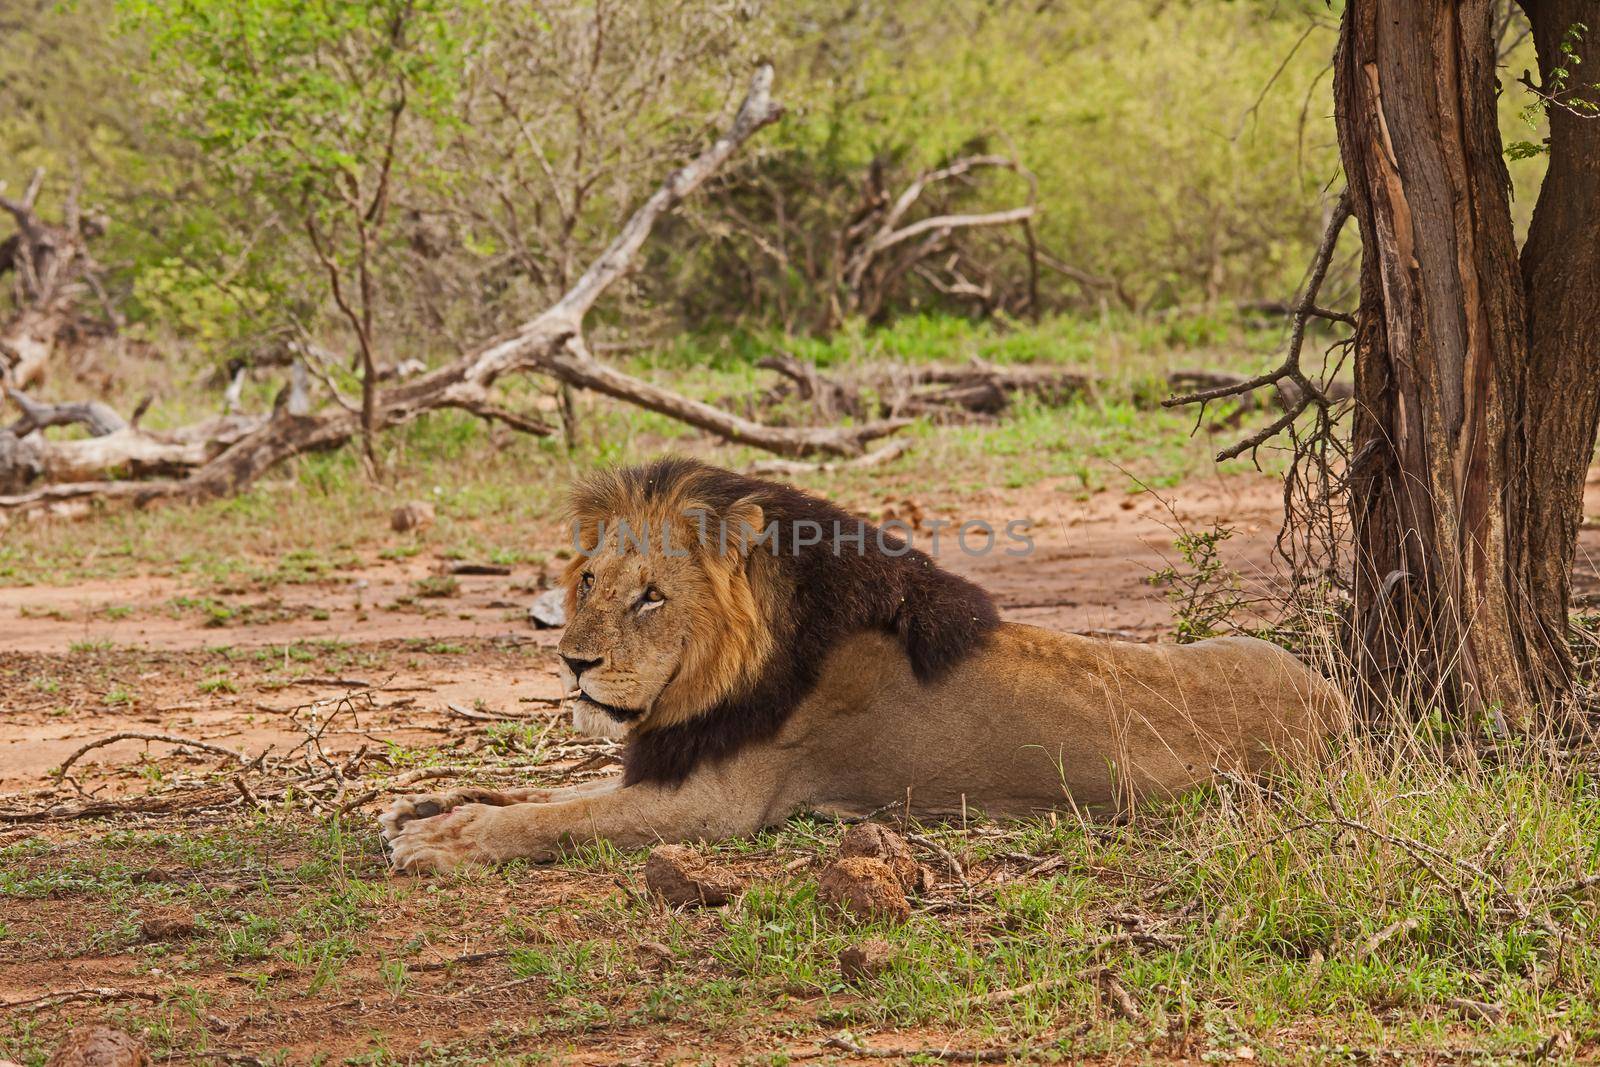 Single Male Lion 14811 by kobus_peche